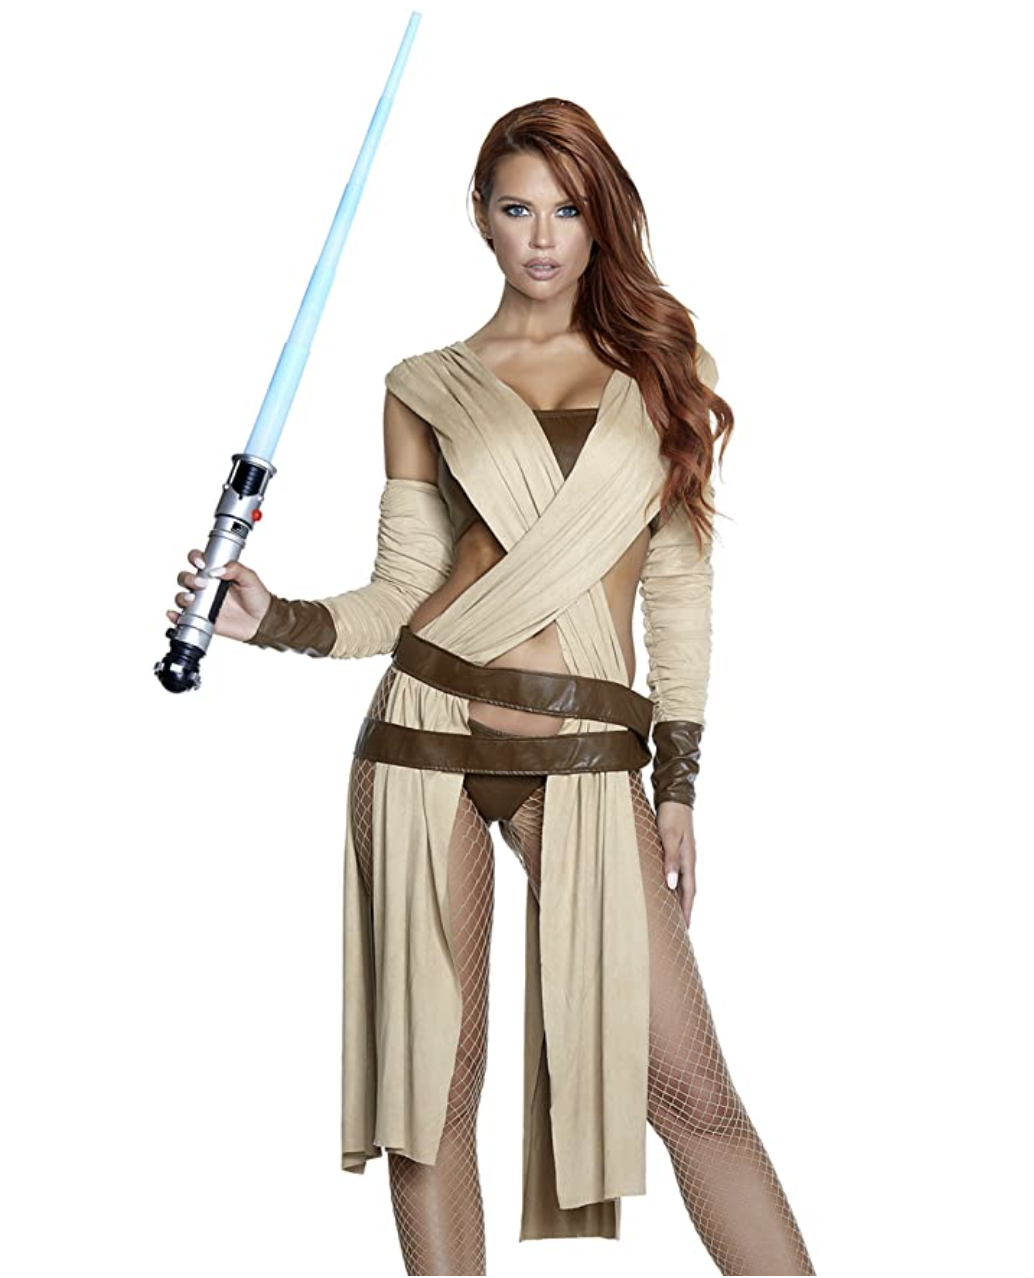 Star Wars fantasy sex in costumes